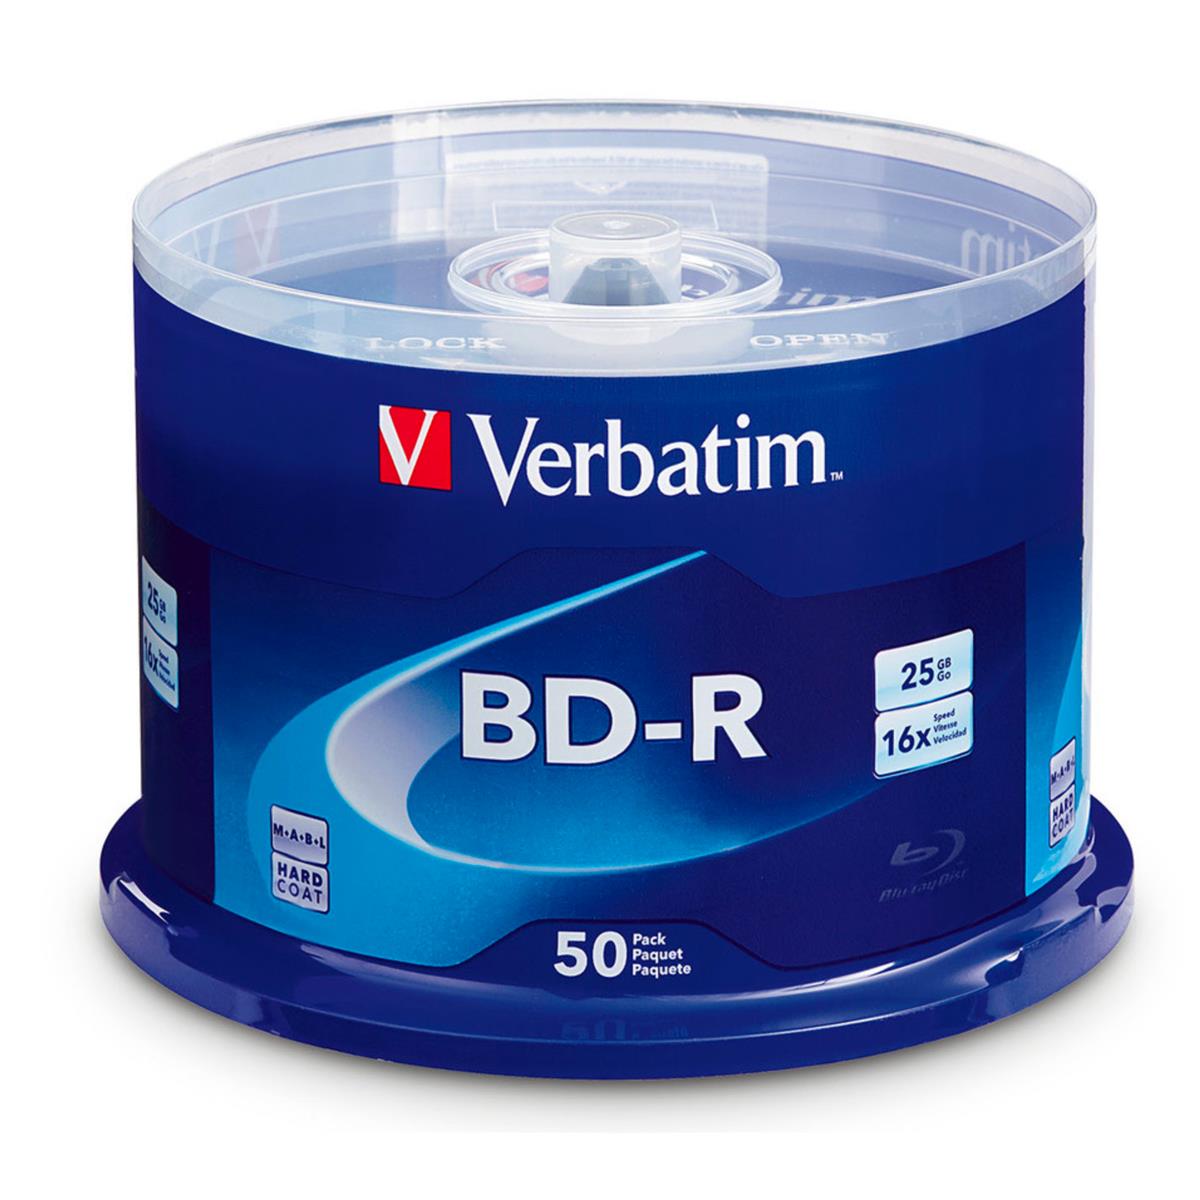 Image of Verbatim 25GB 16x BD-R Blu-ray Recordable Disc